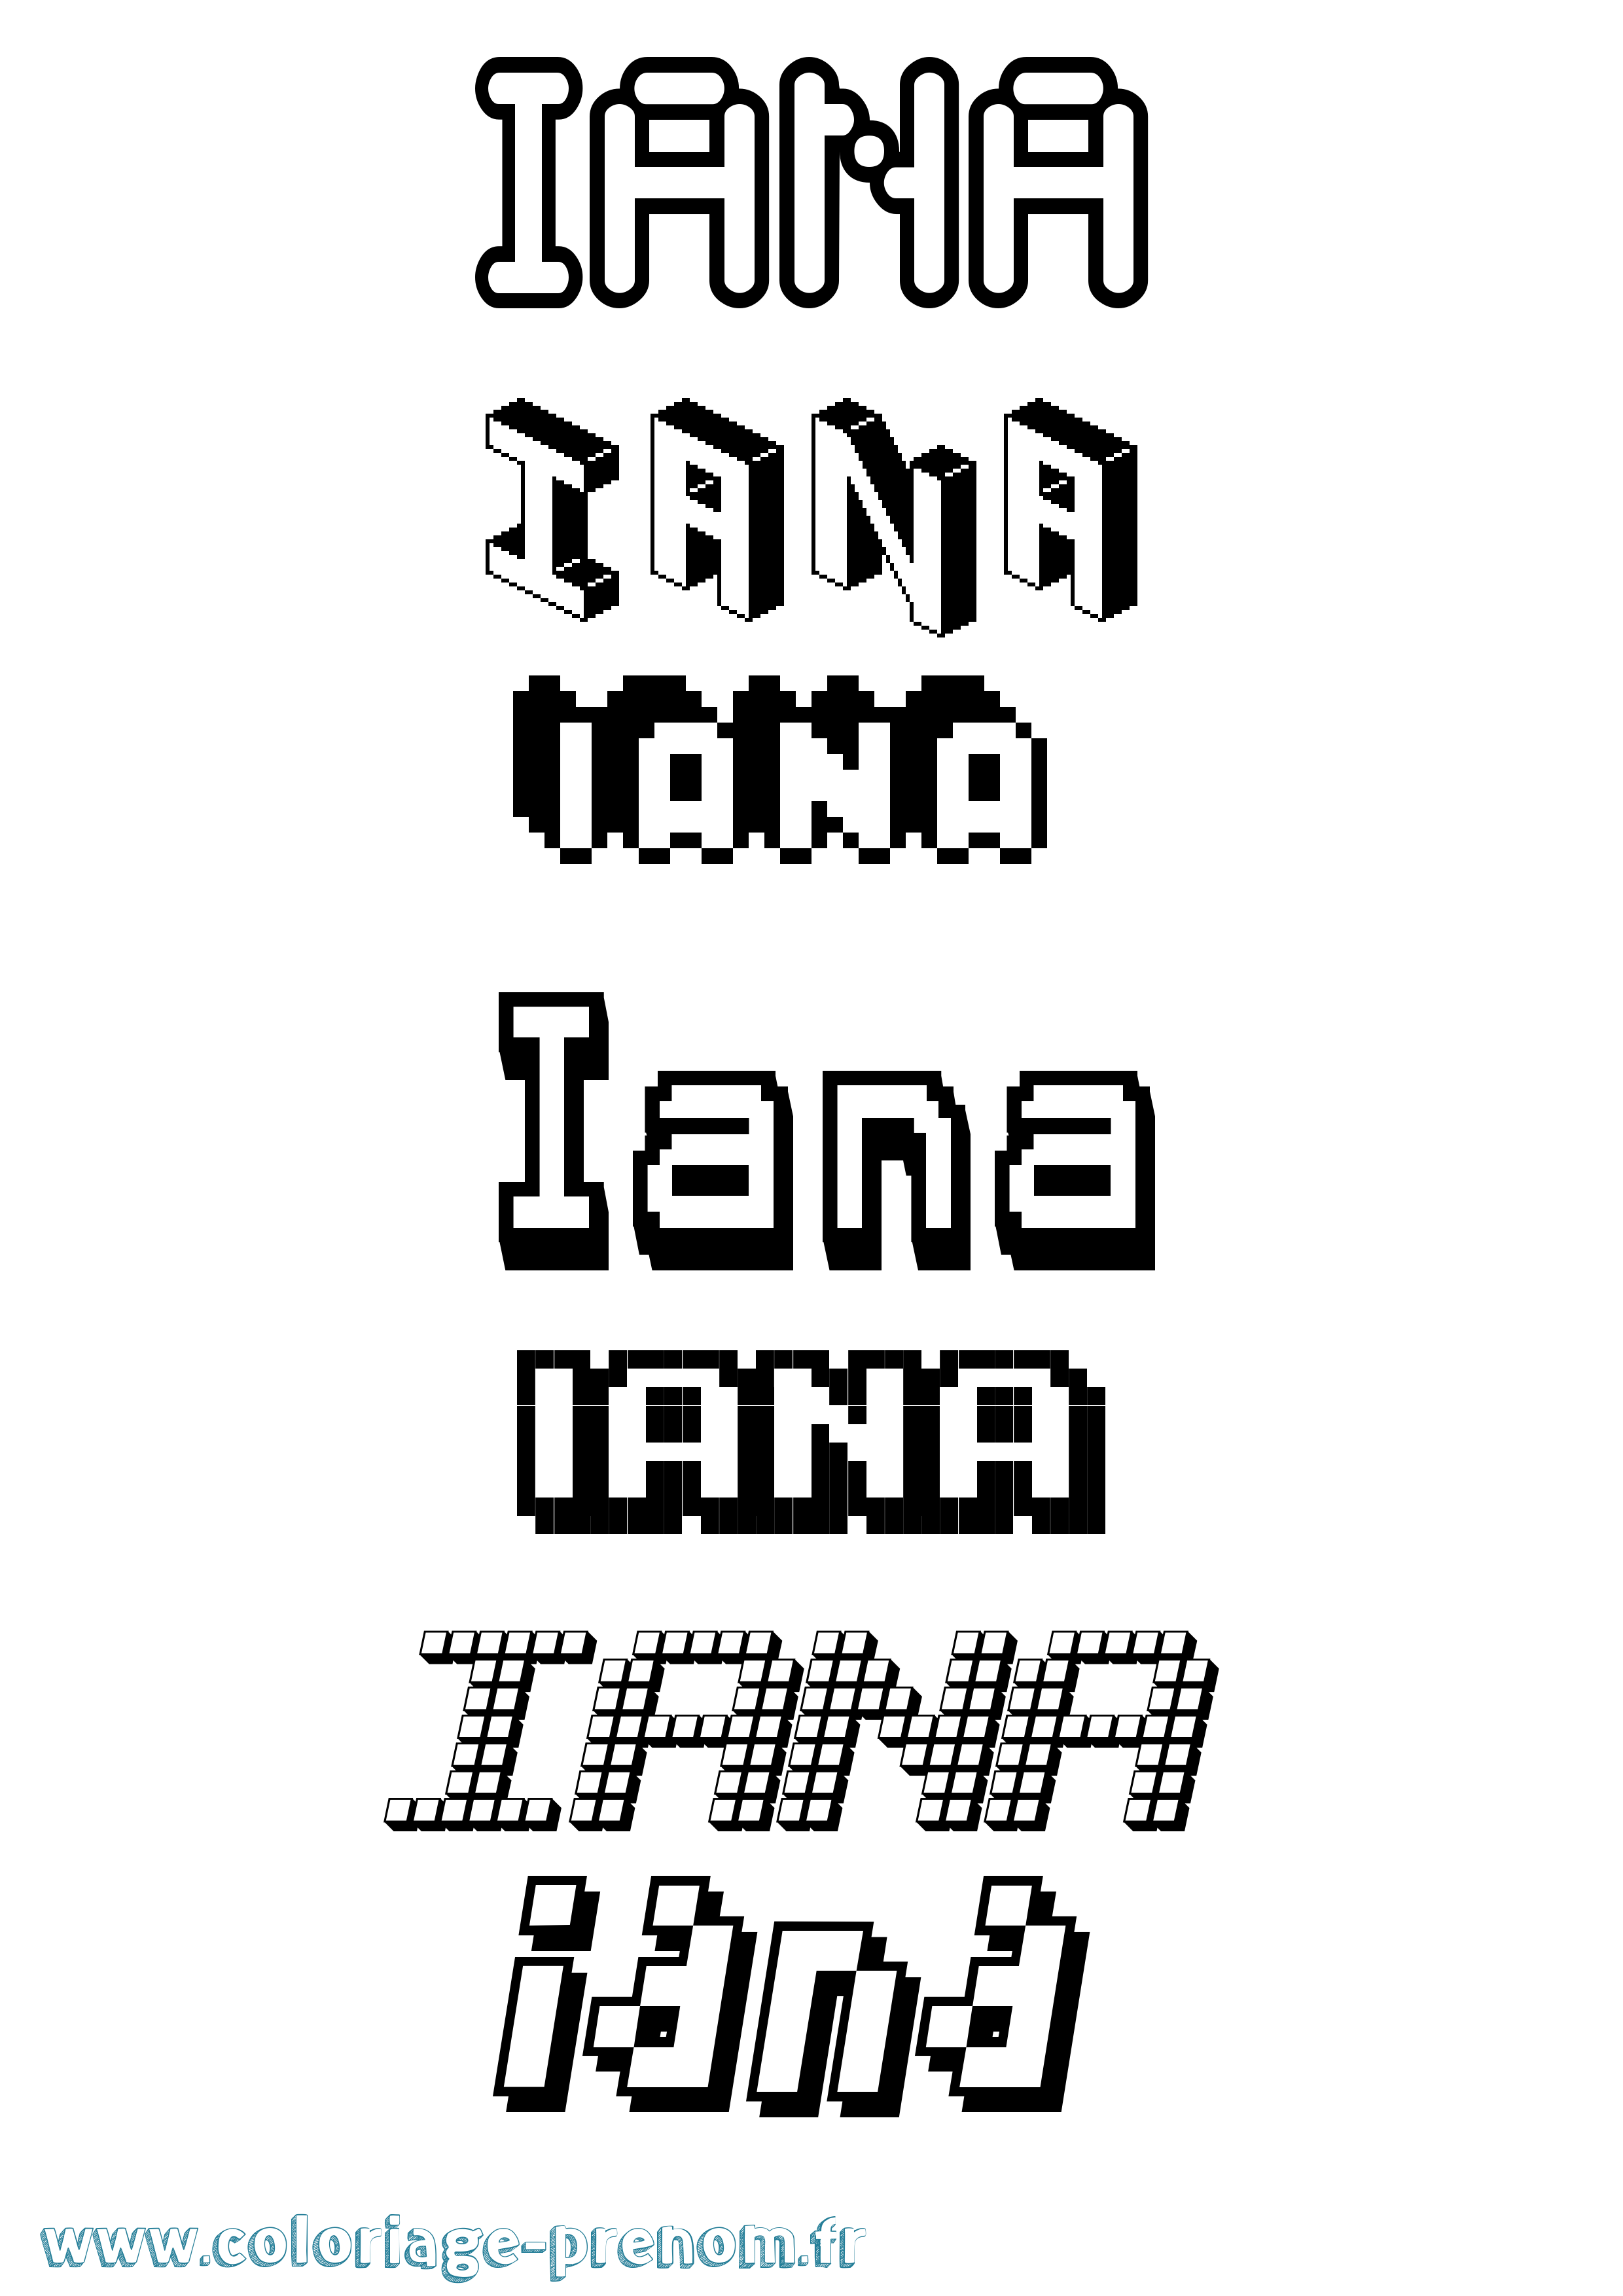 Coloriage prénom Iana Pixel